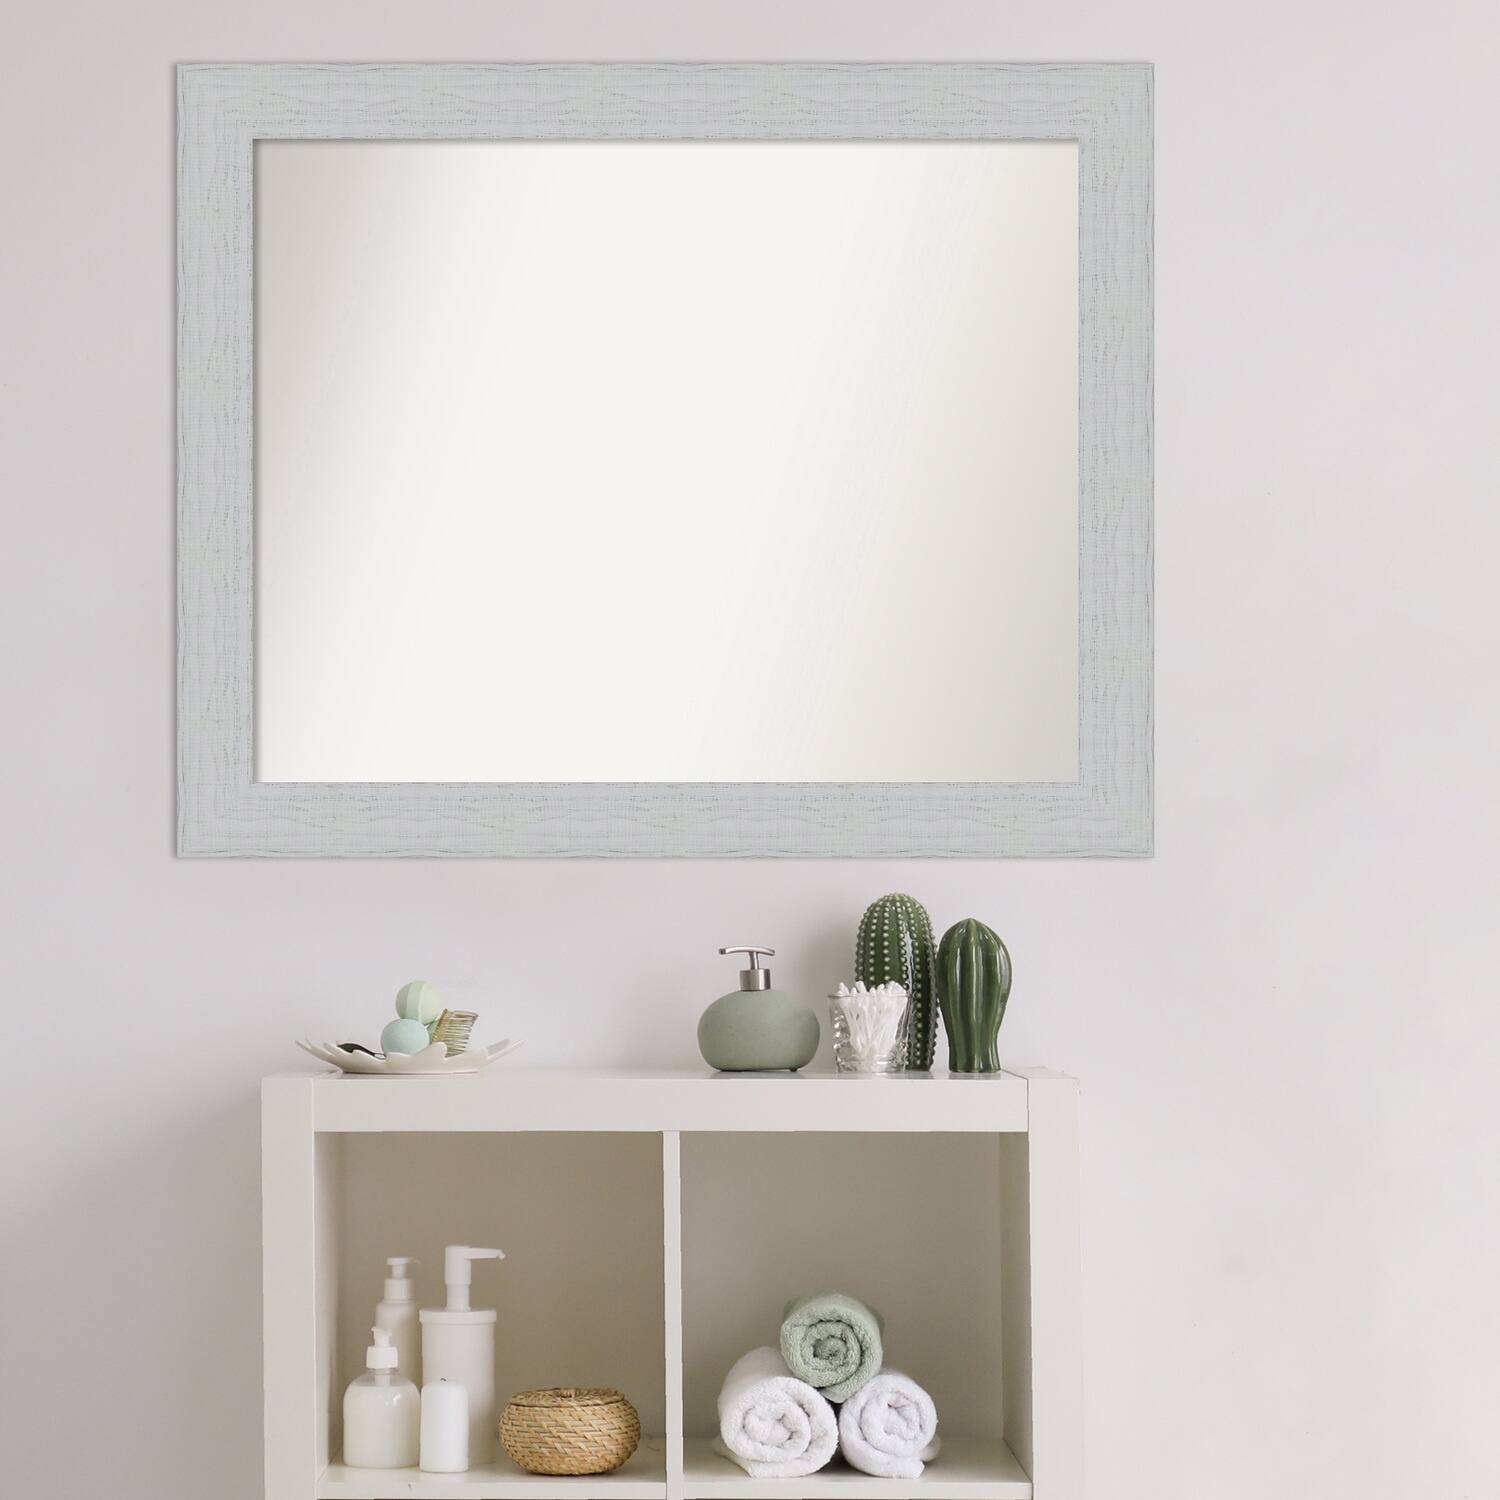 Non-Beveled Wood Bathroom Wall Mirror - Shiplap White Frame